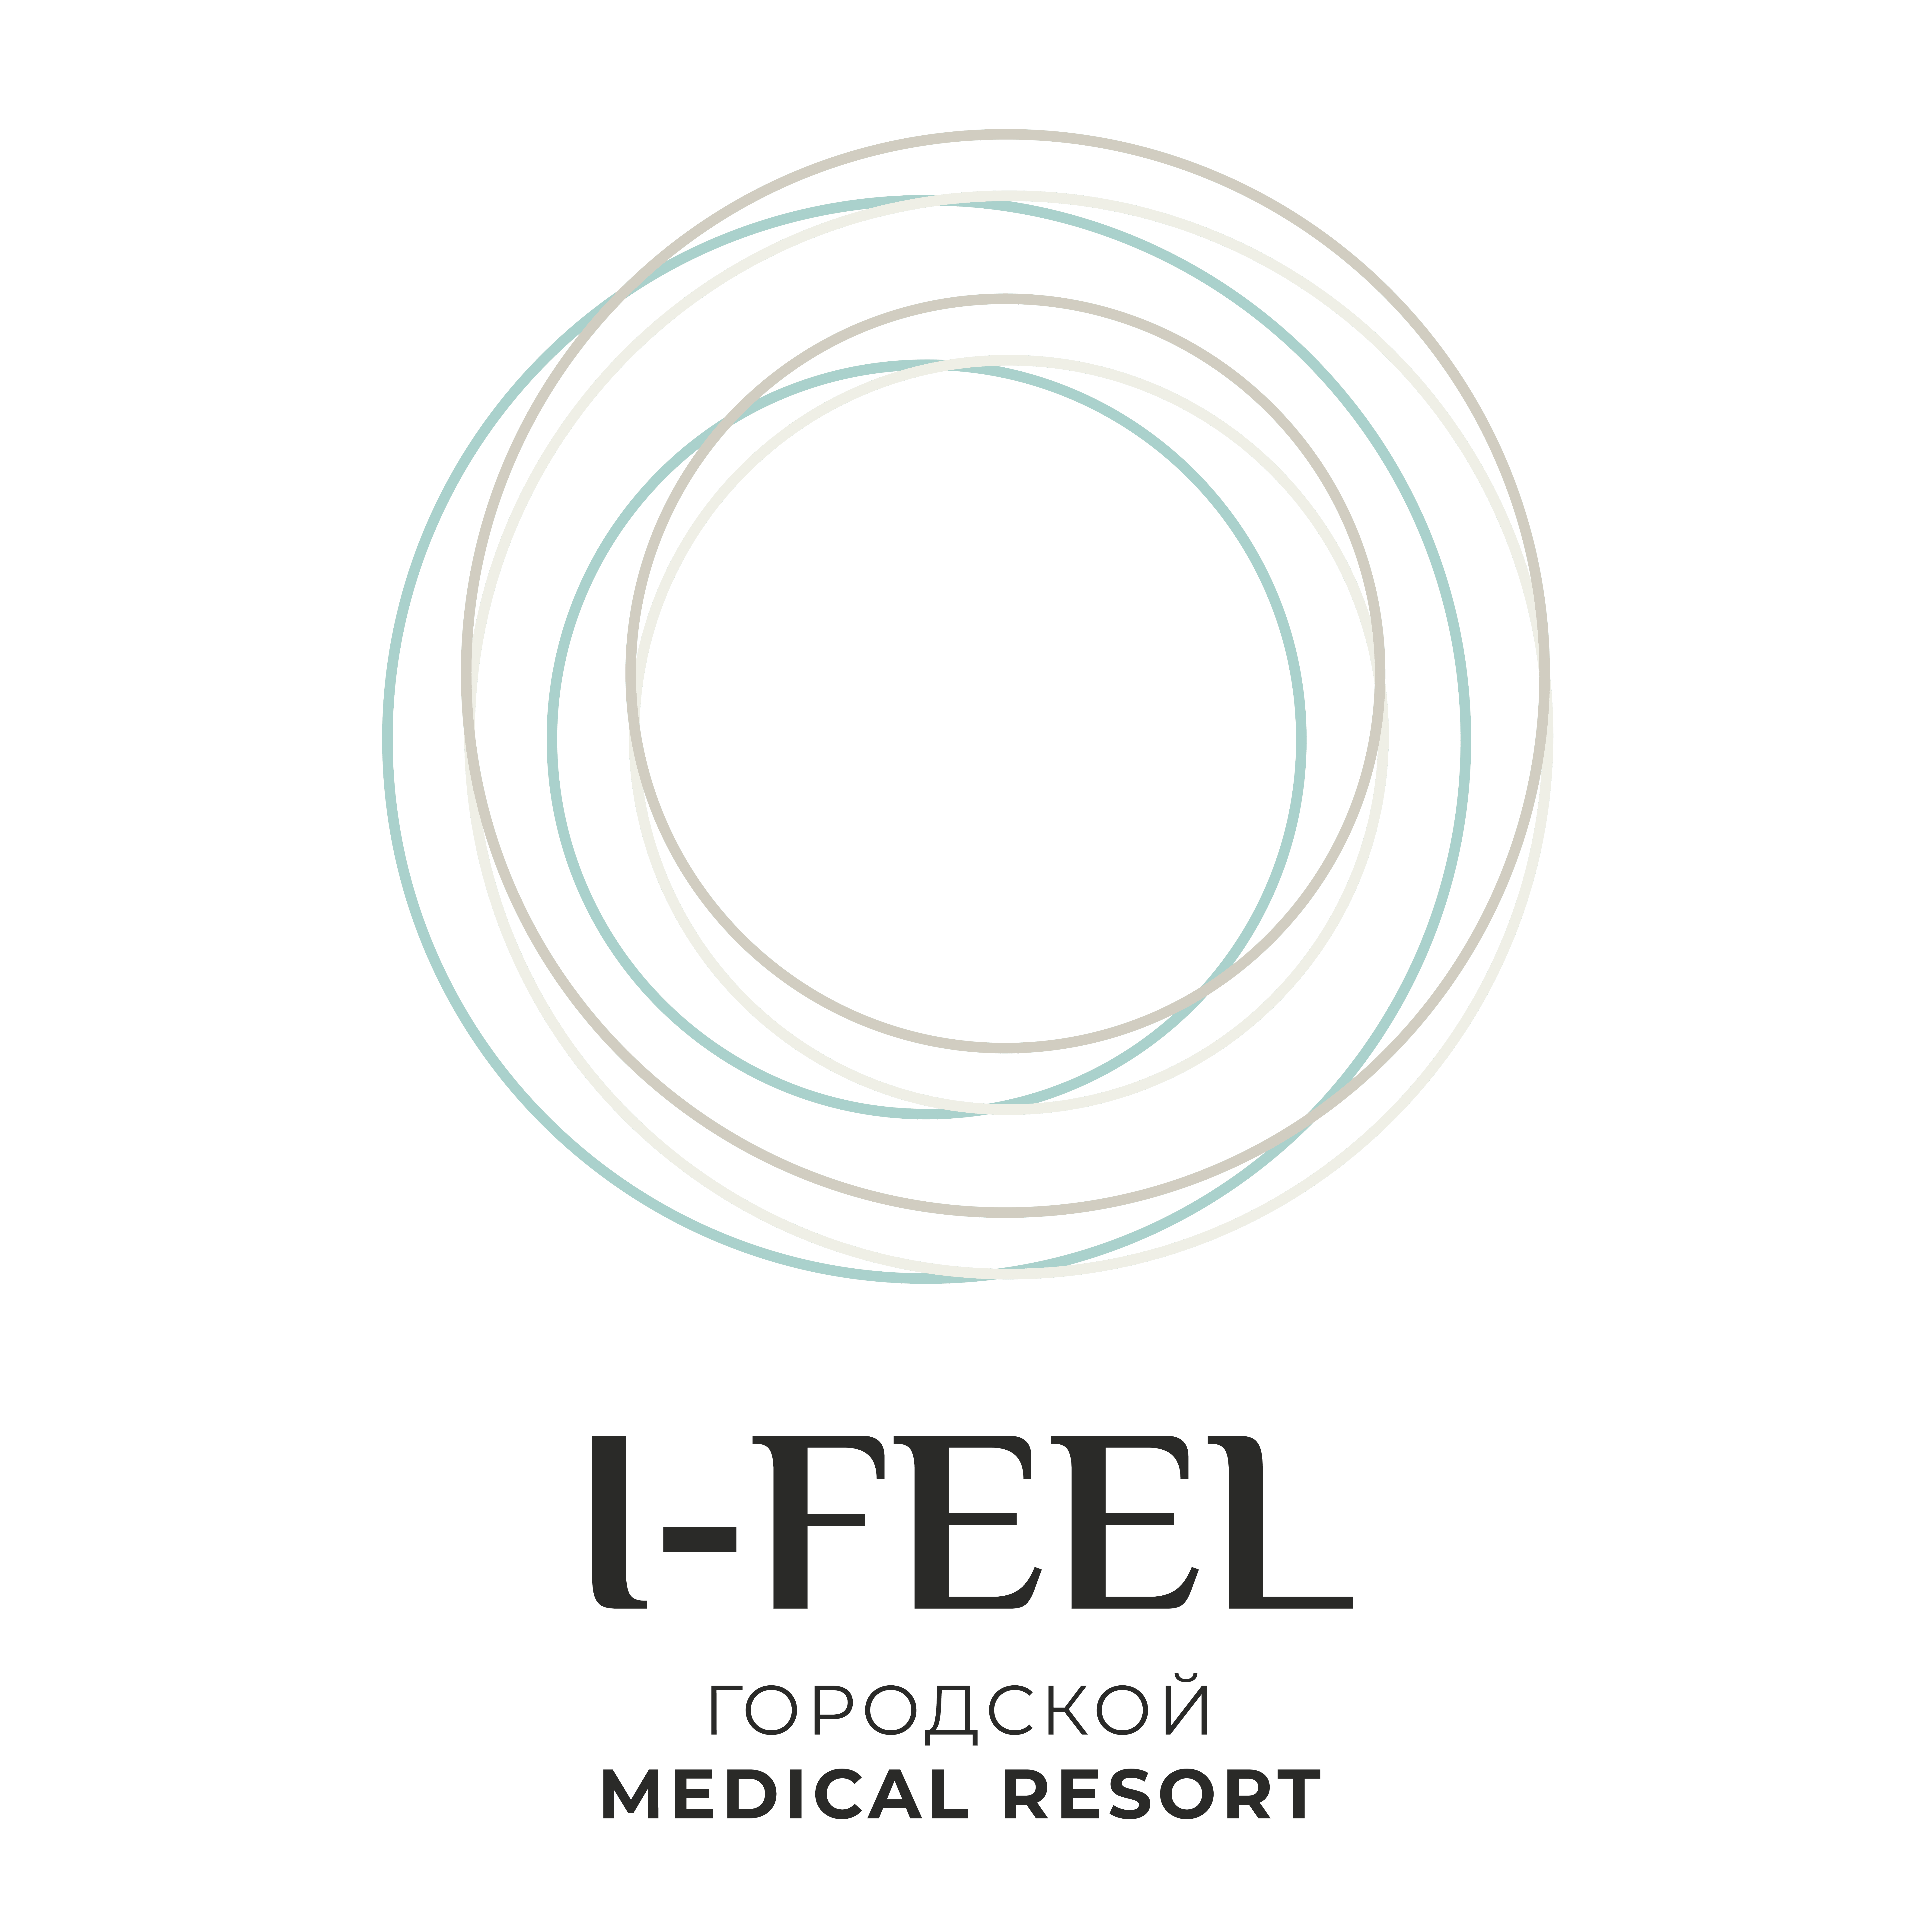 I-FEEL MEDICAL RESORT - новый партнер SARTO REALE